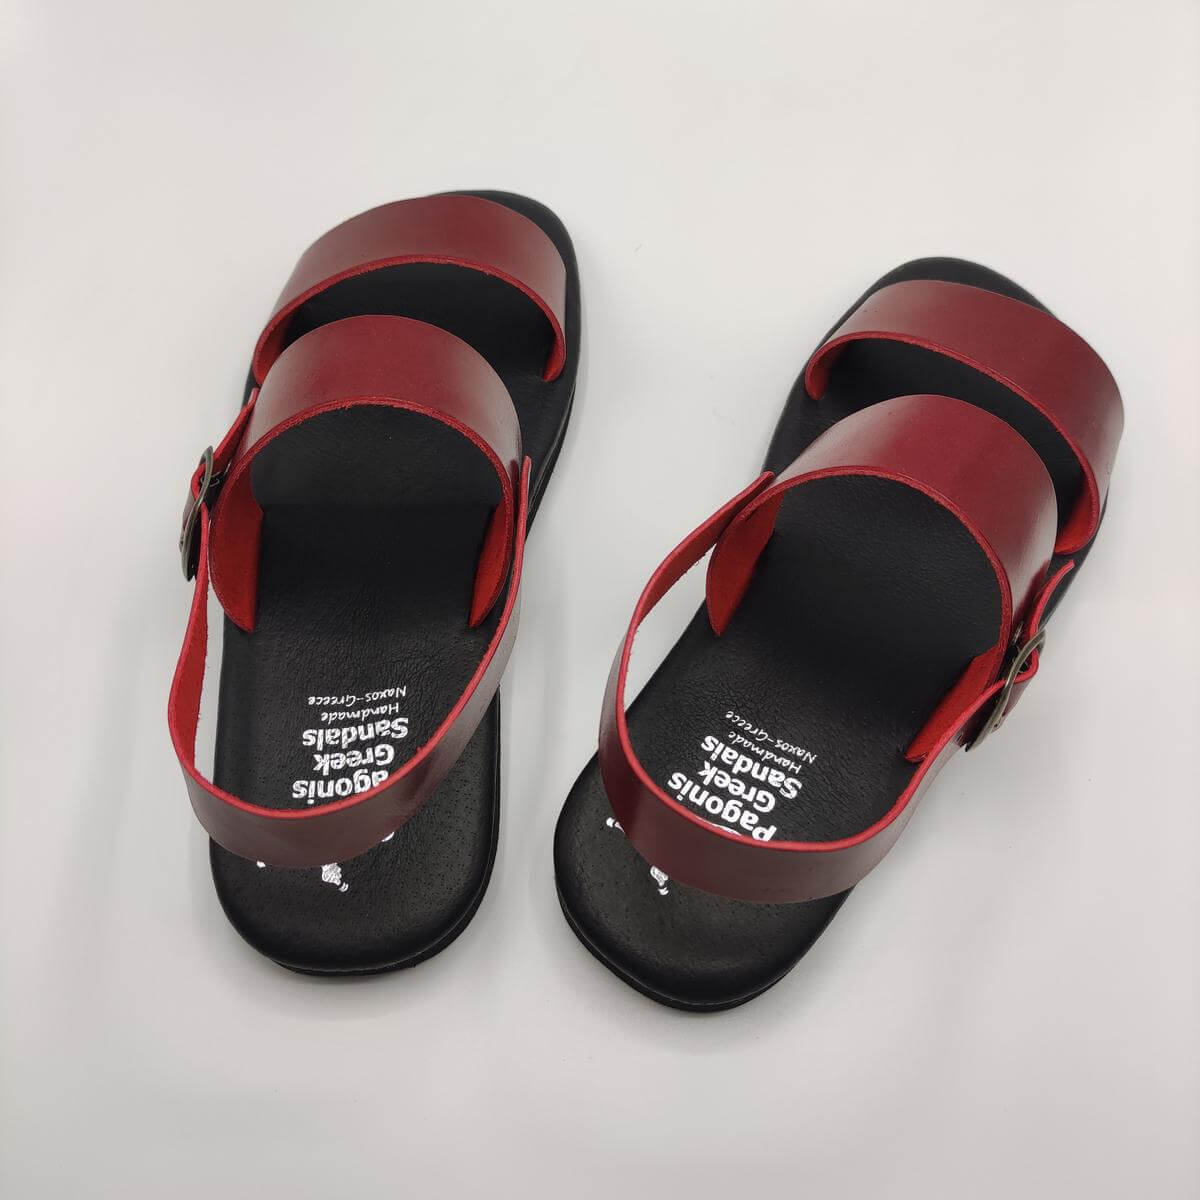 Comfort Mens Sandals With Back Strap Bordo Color